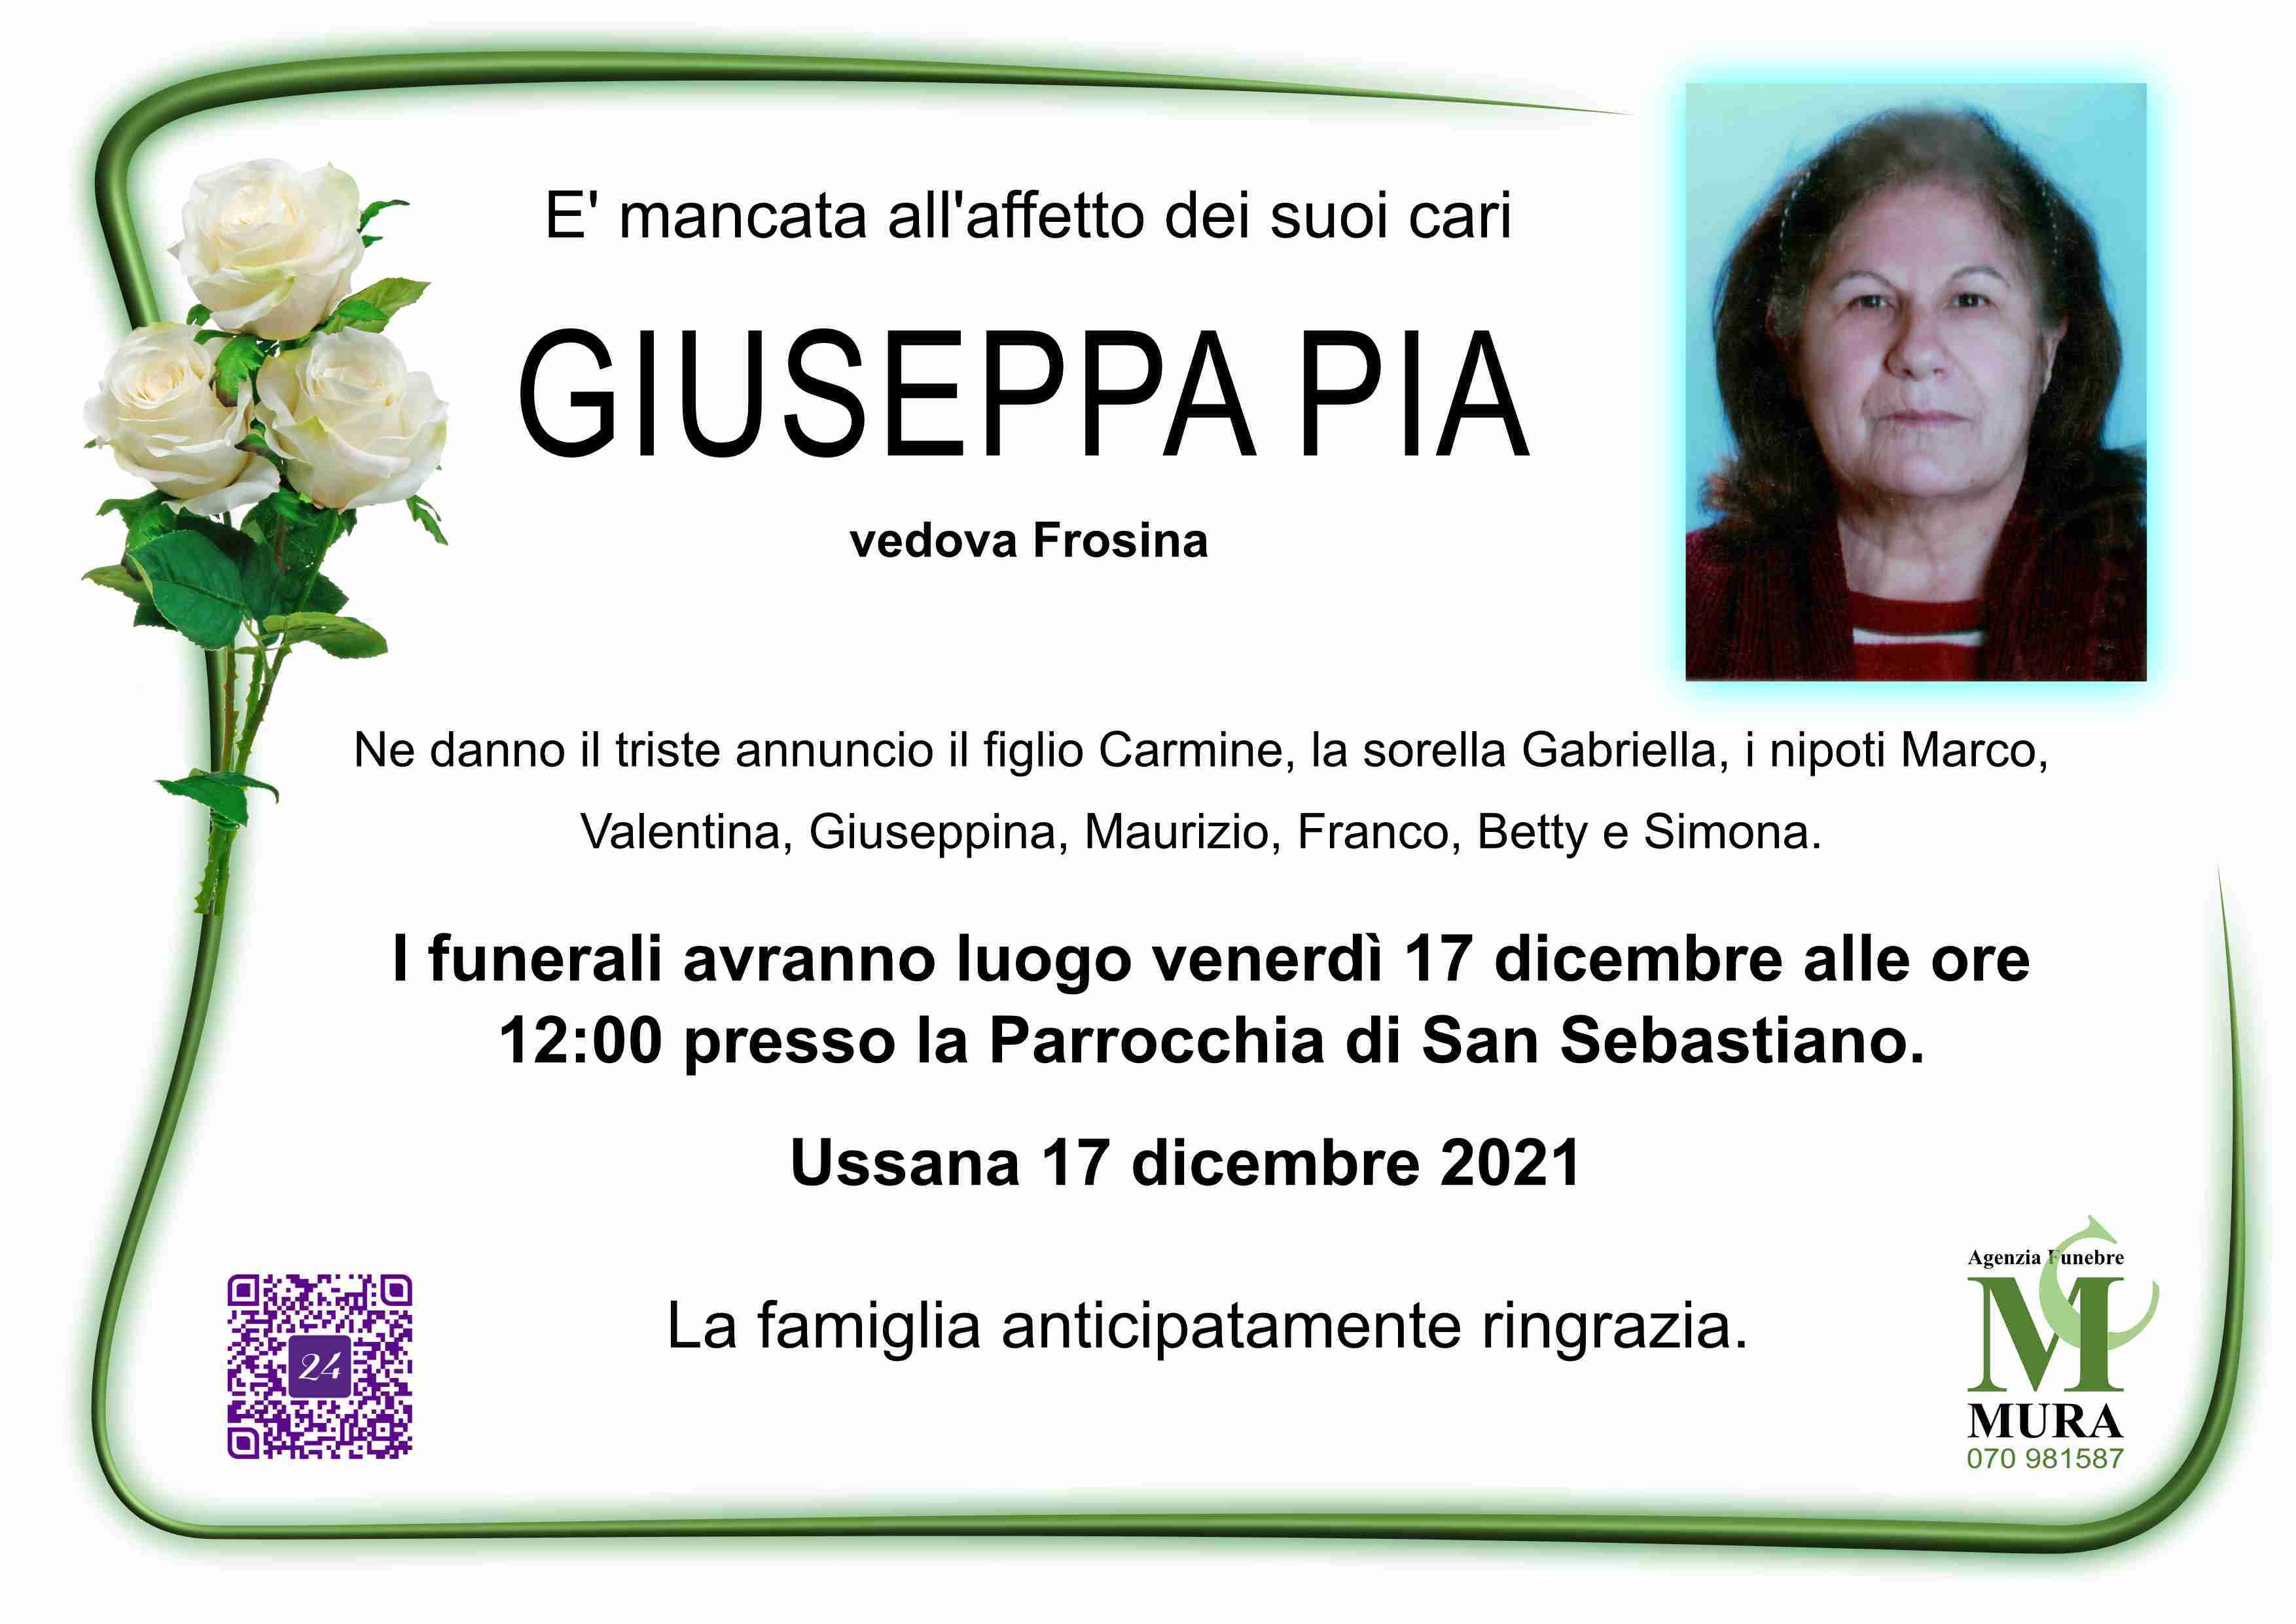 Giuseppa Pia